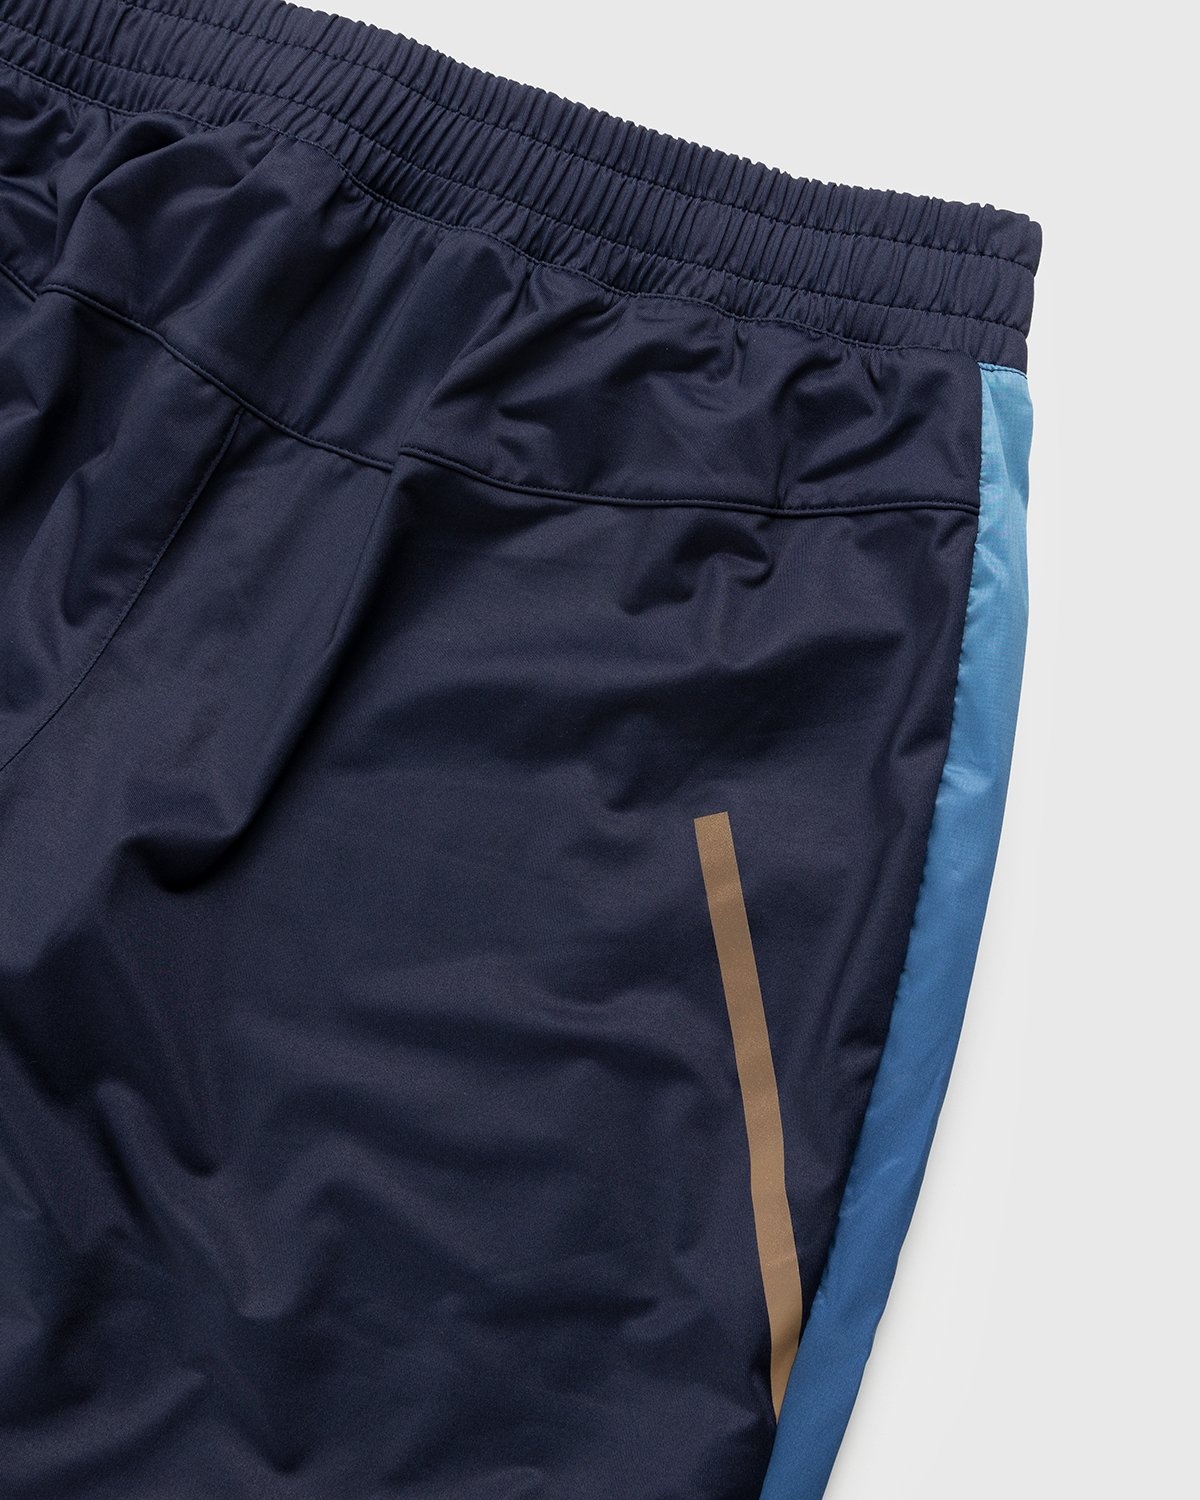 Loewe x On – Women's Technical Running Pants Gradient Blue - Pants - Blue - Image 4